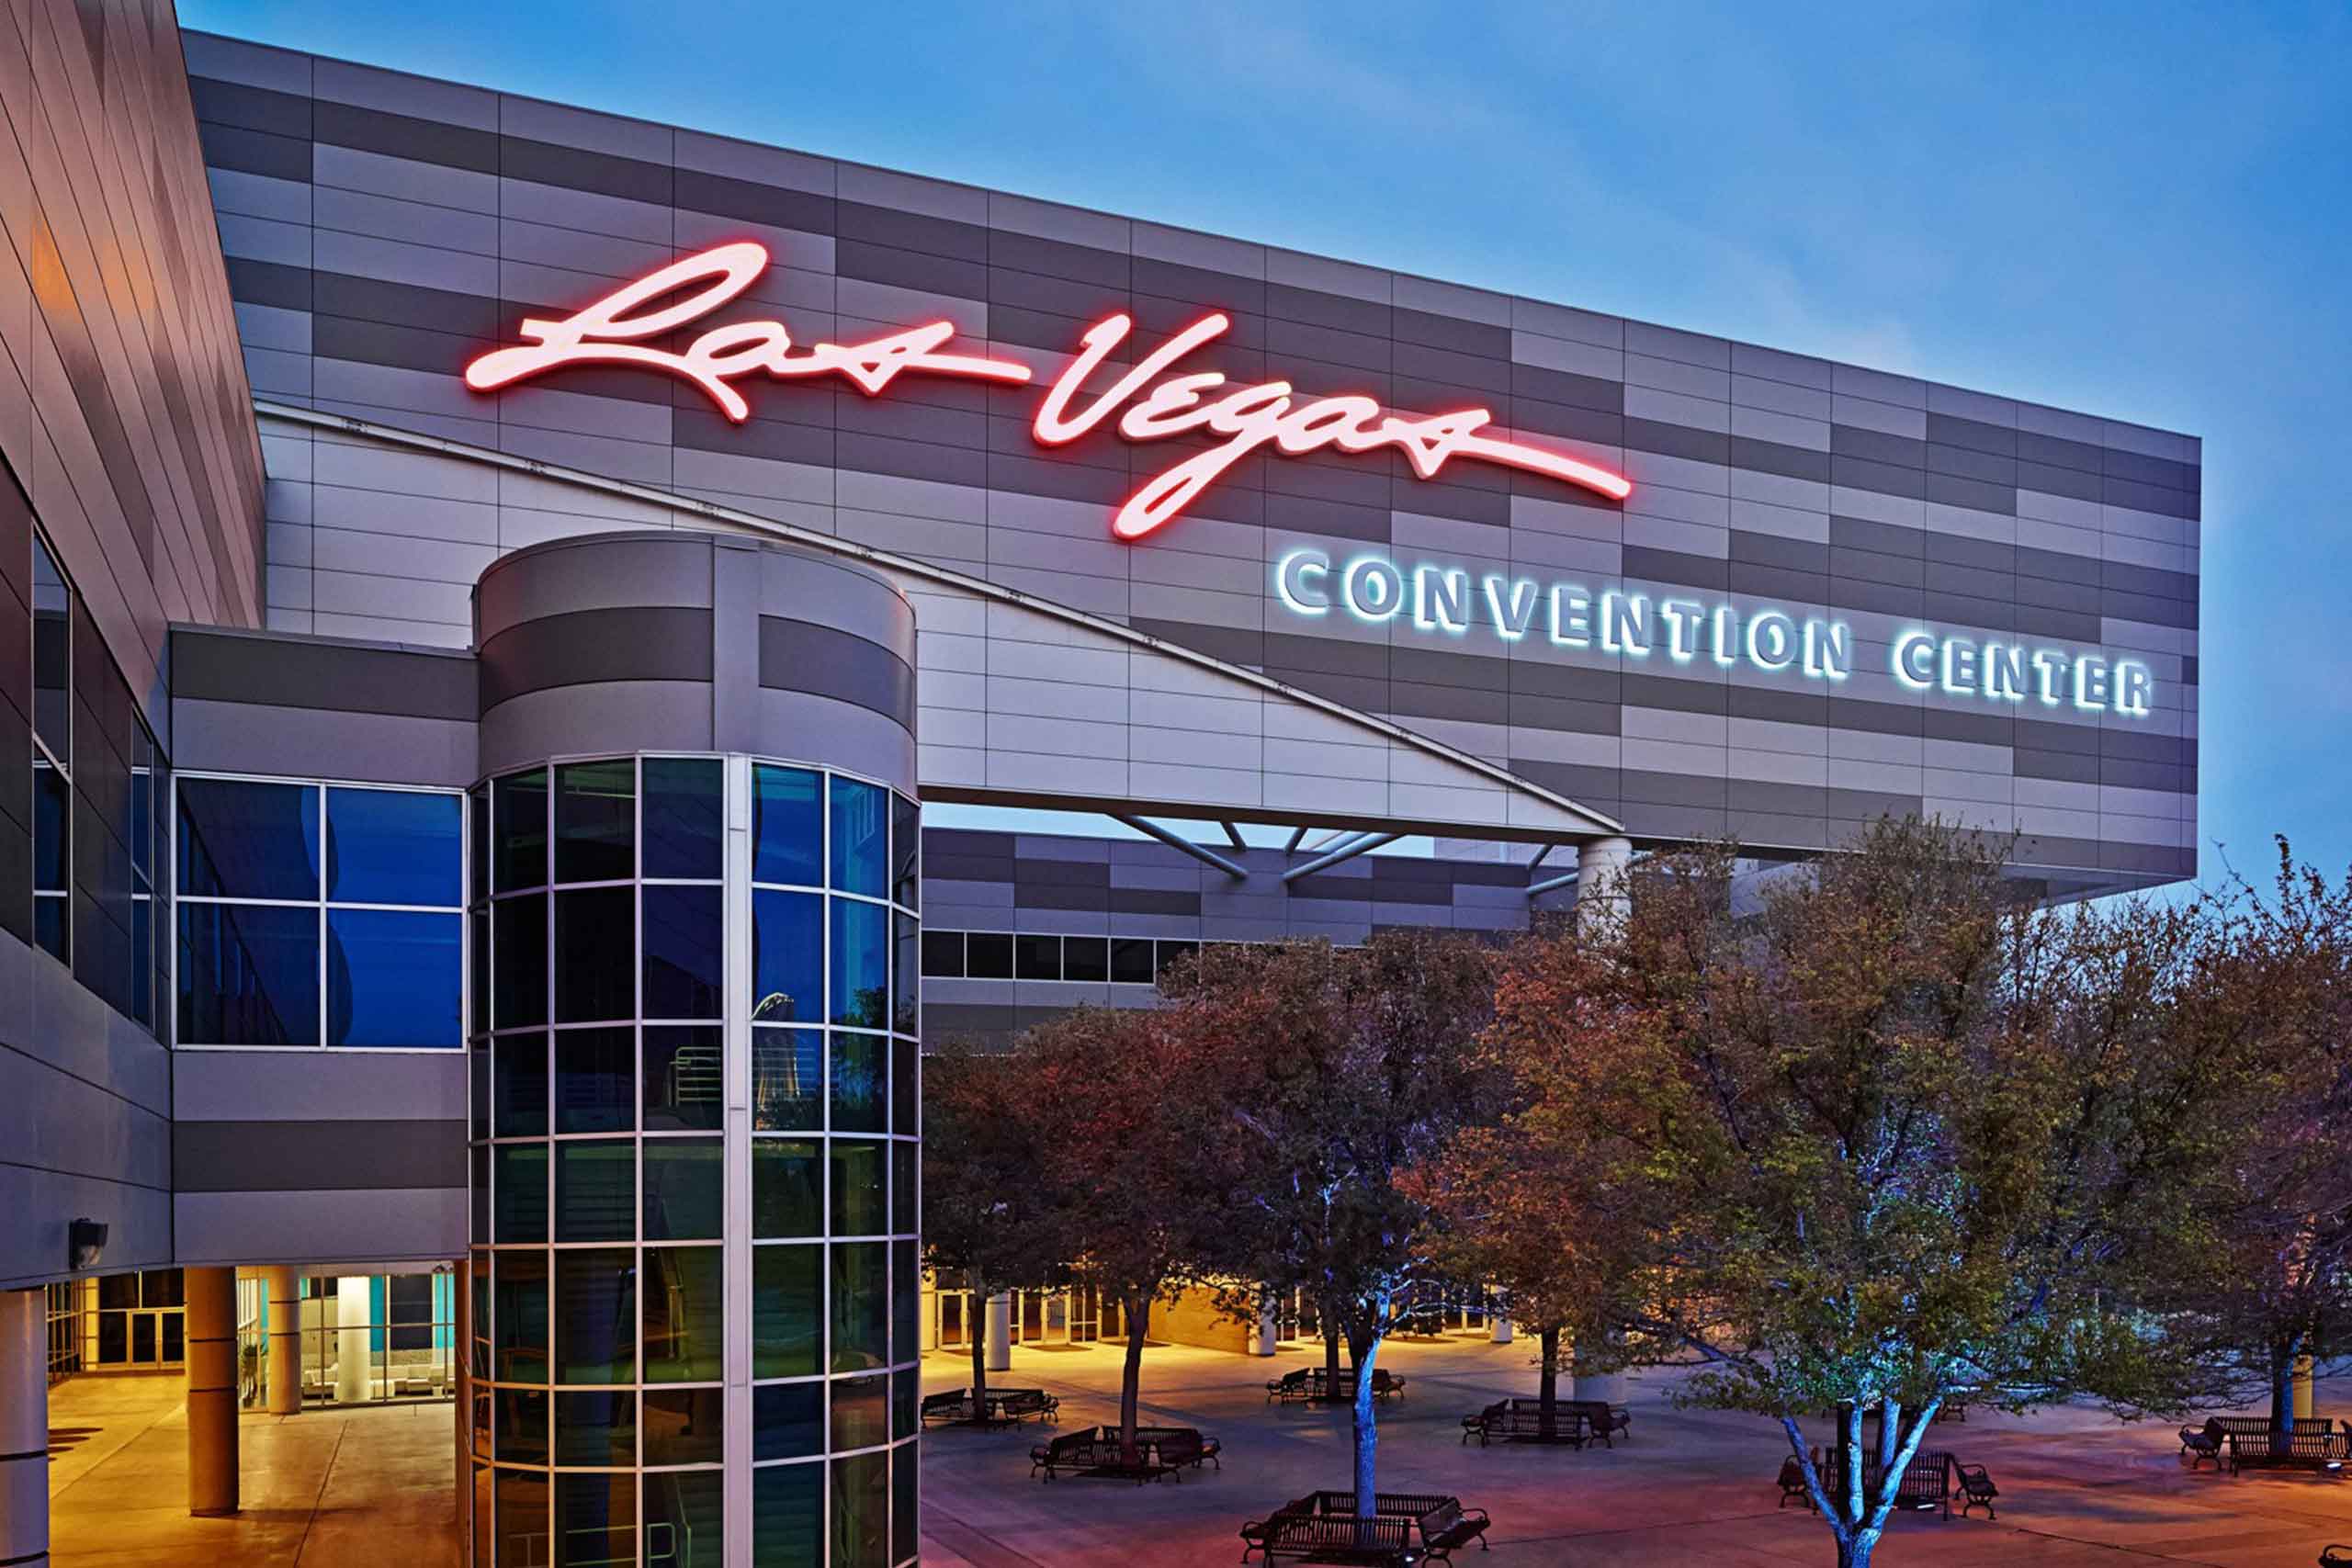 Las Vegas Convention Center Boxing Arena